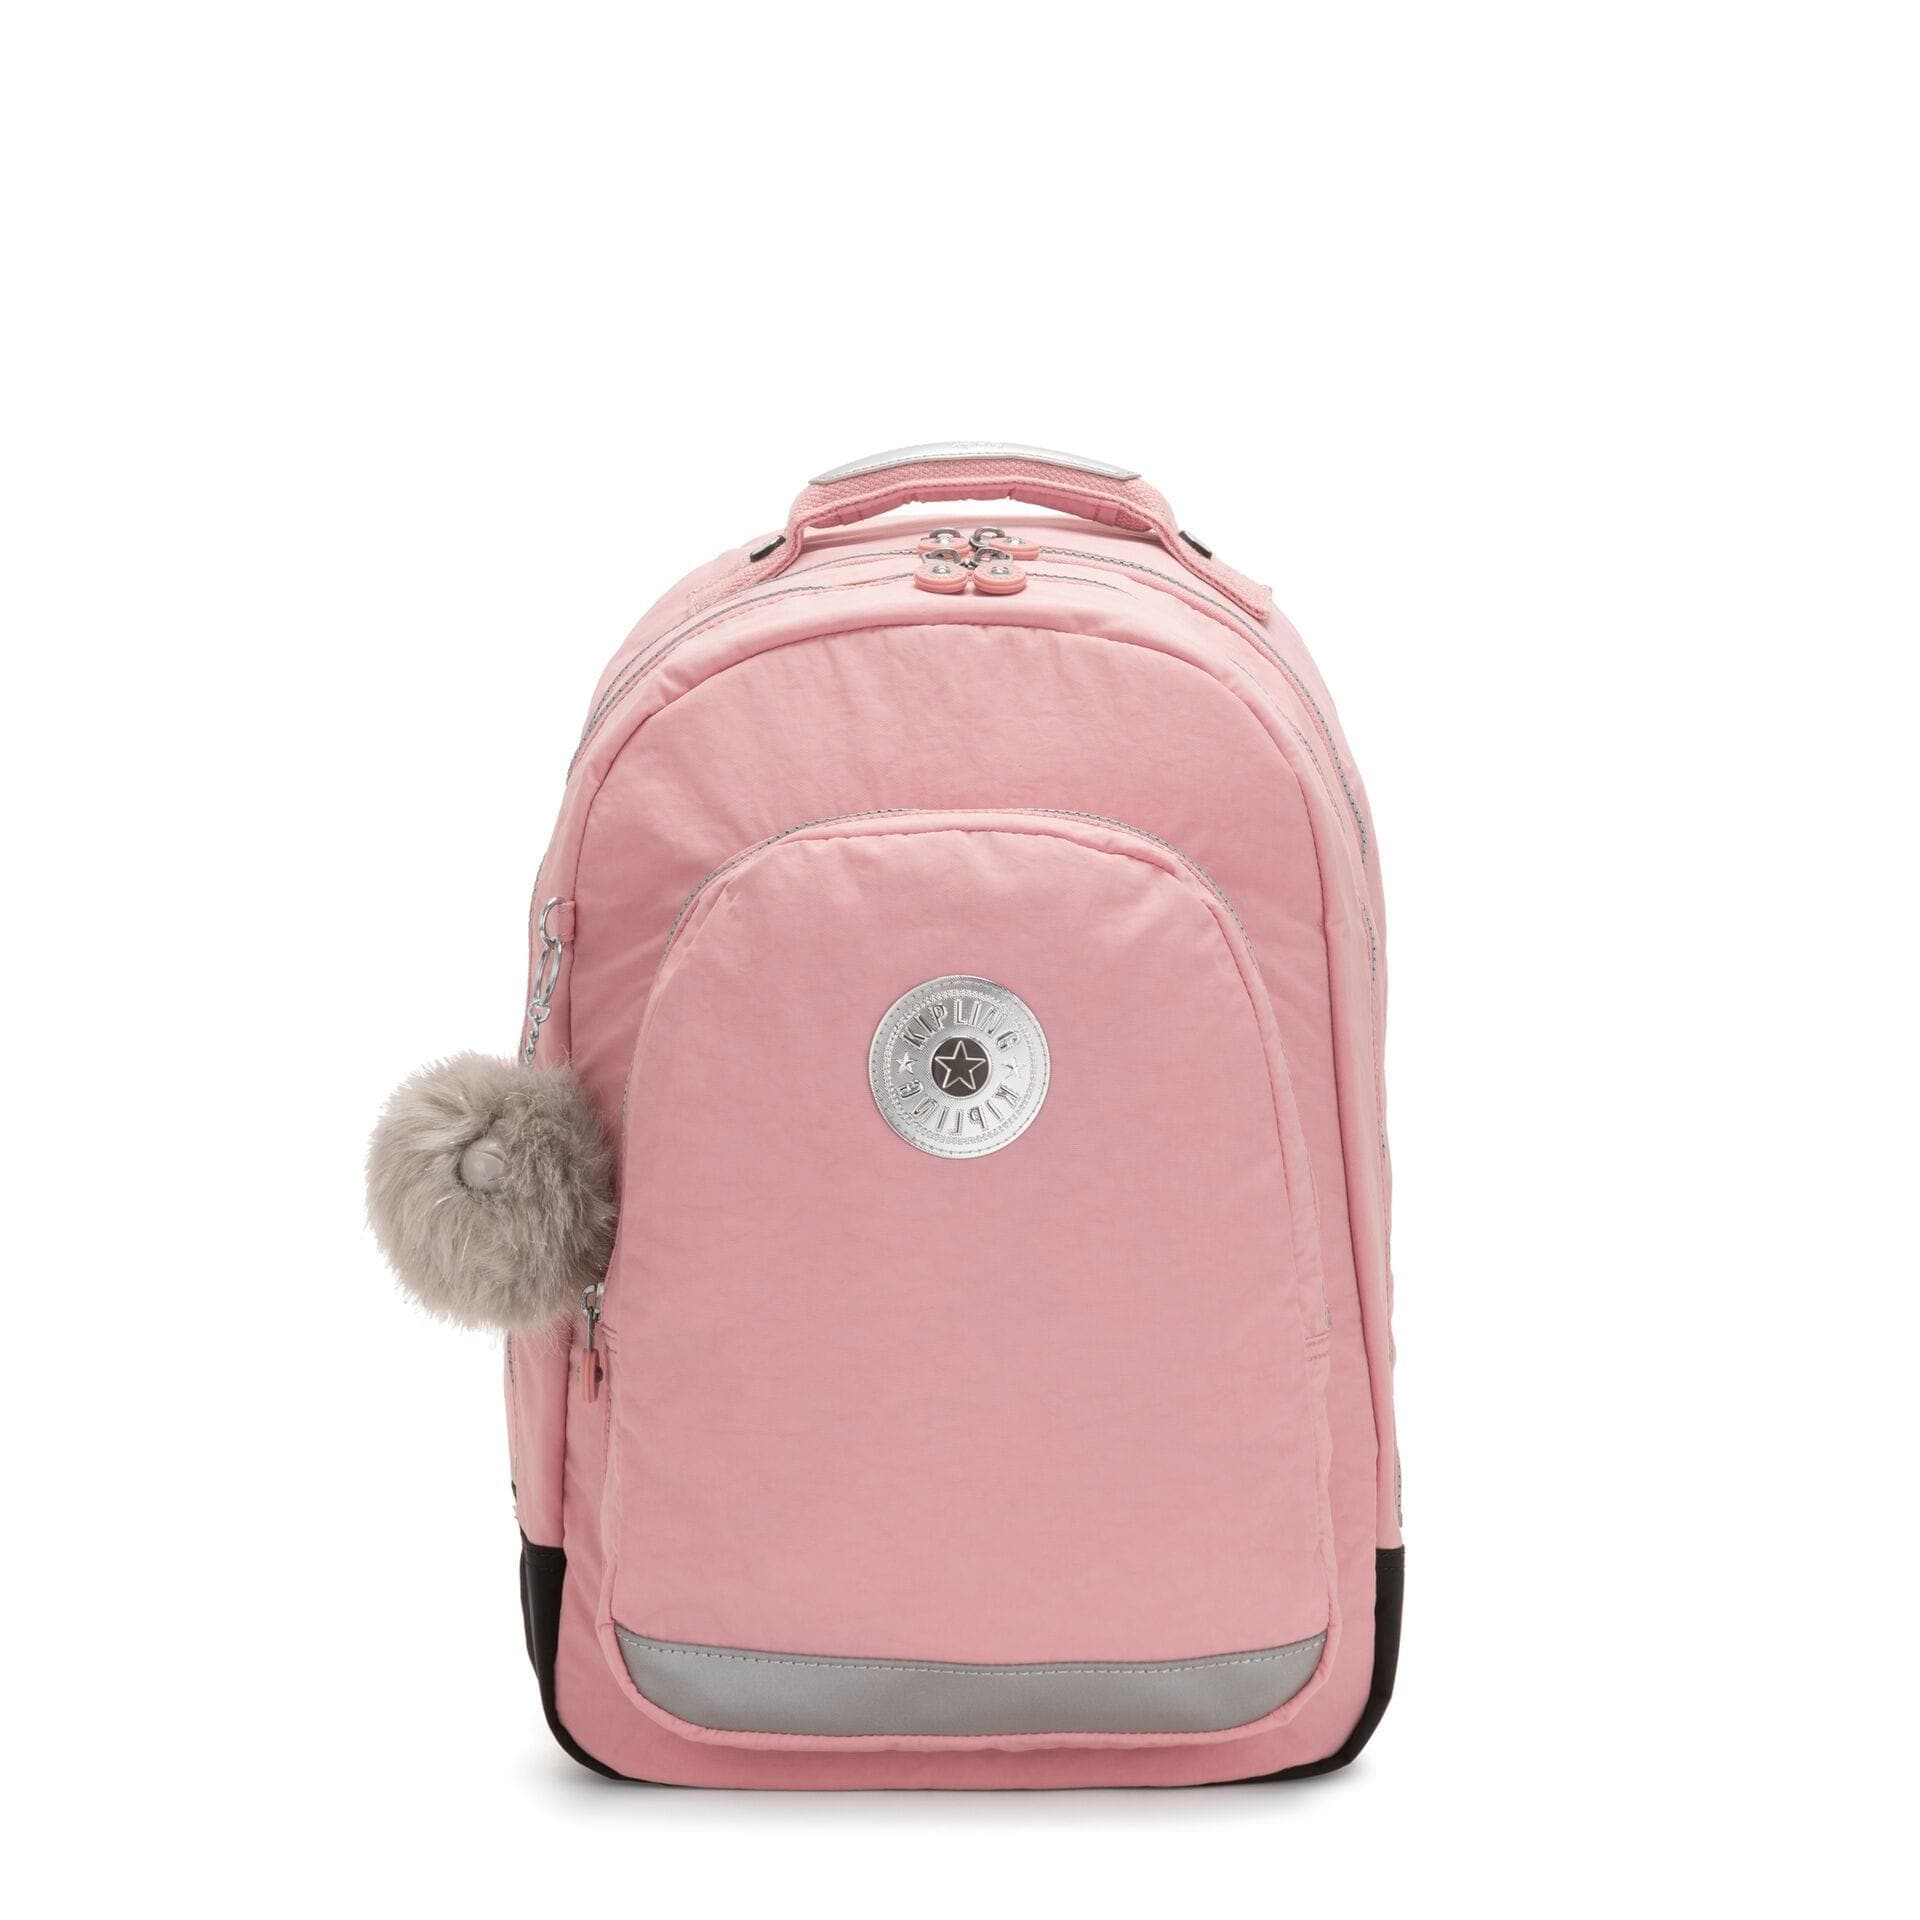 KIPLING-CLASS ROOM-Large backpack (with laptop protection)-Bridal Rose-I4053-46Y - I4053-46Y